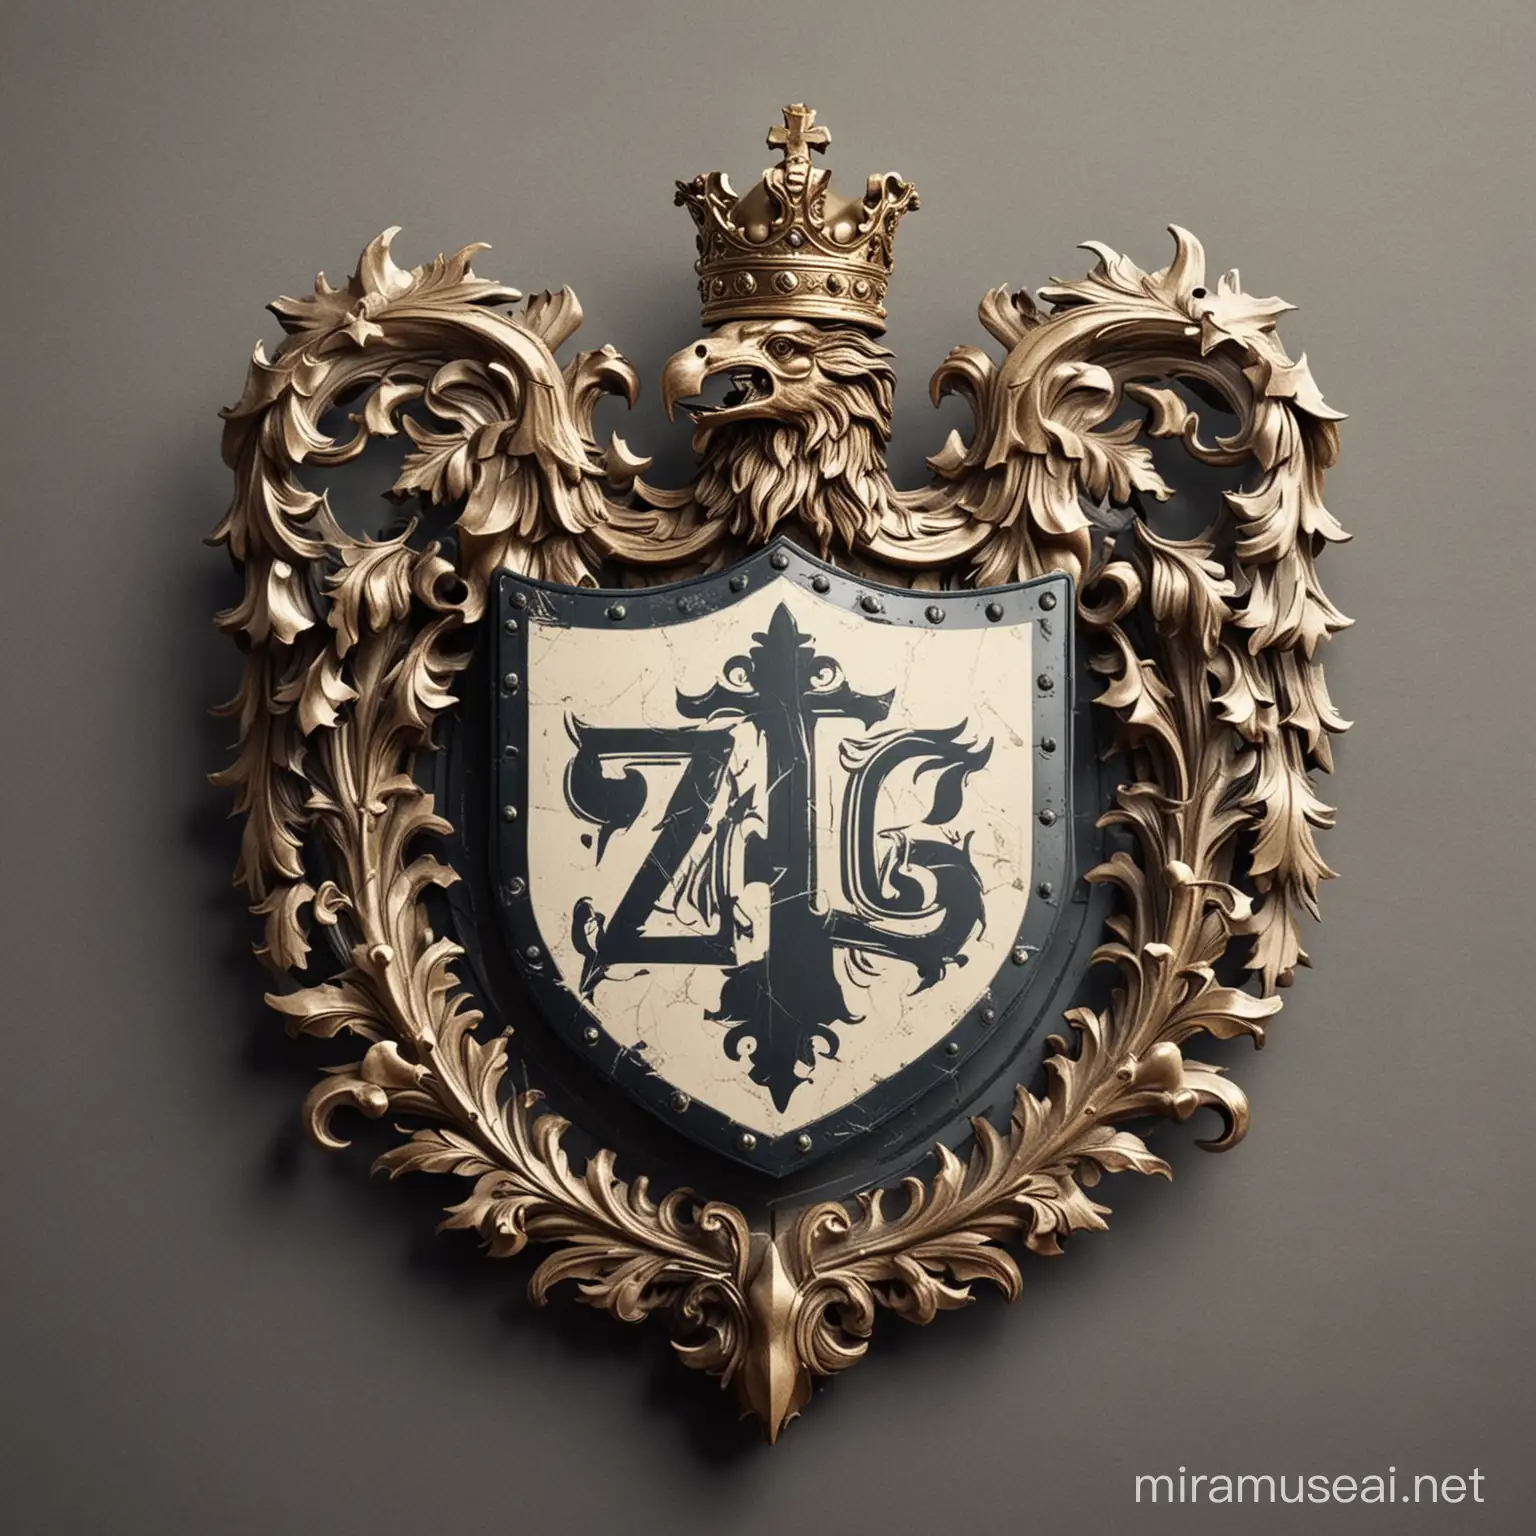 Regal Family Crest Logo for Zing International